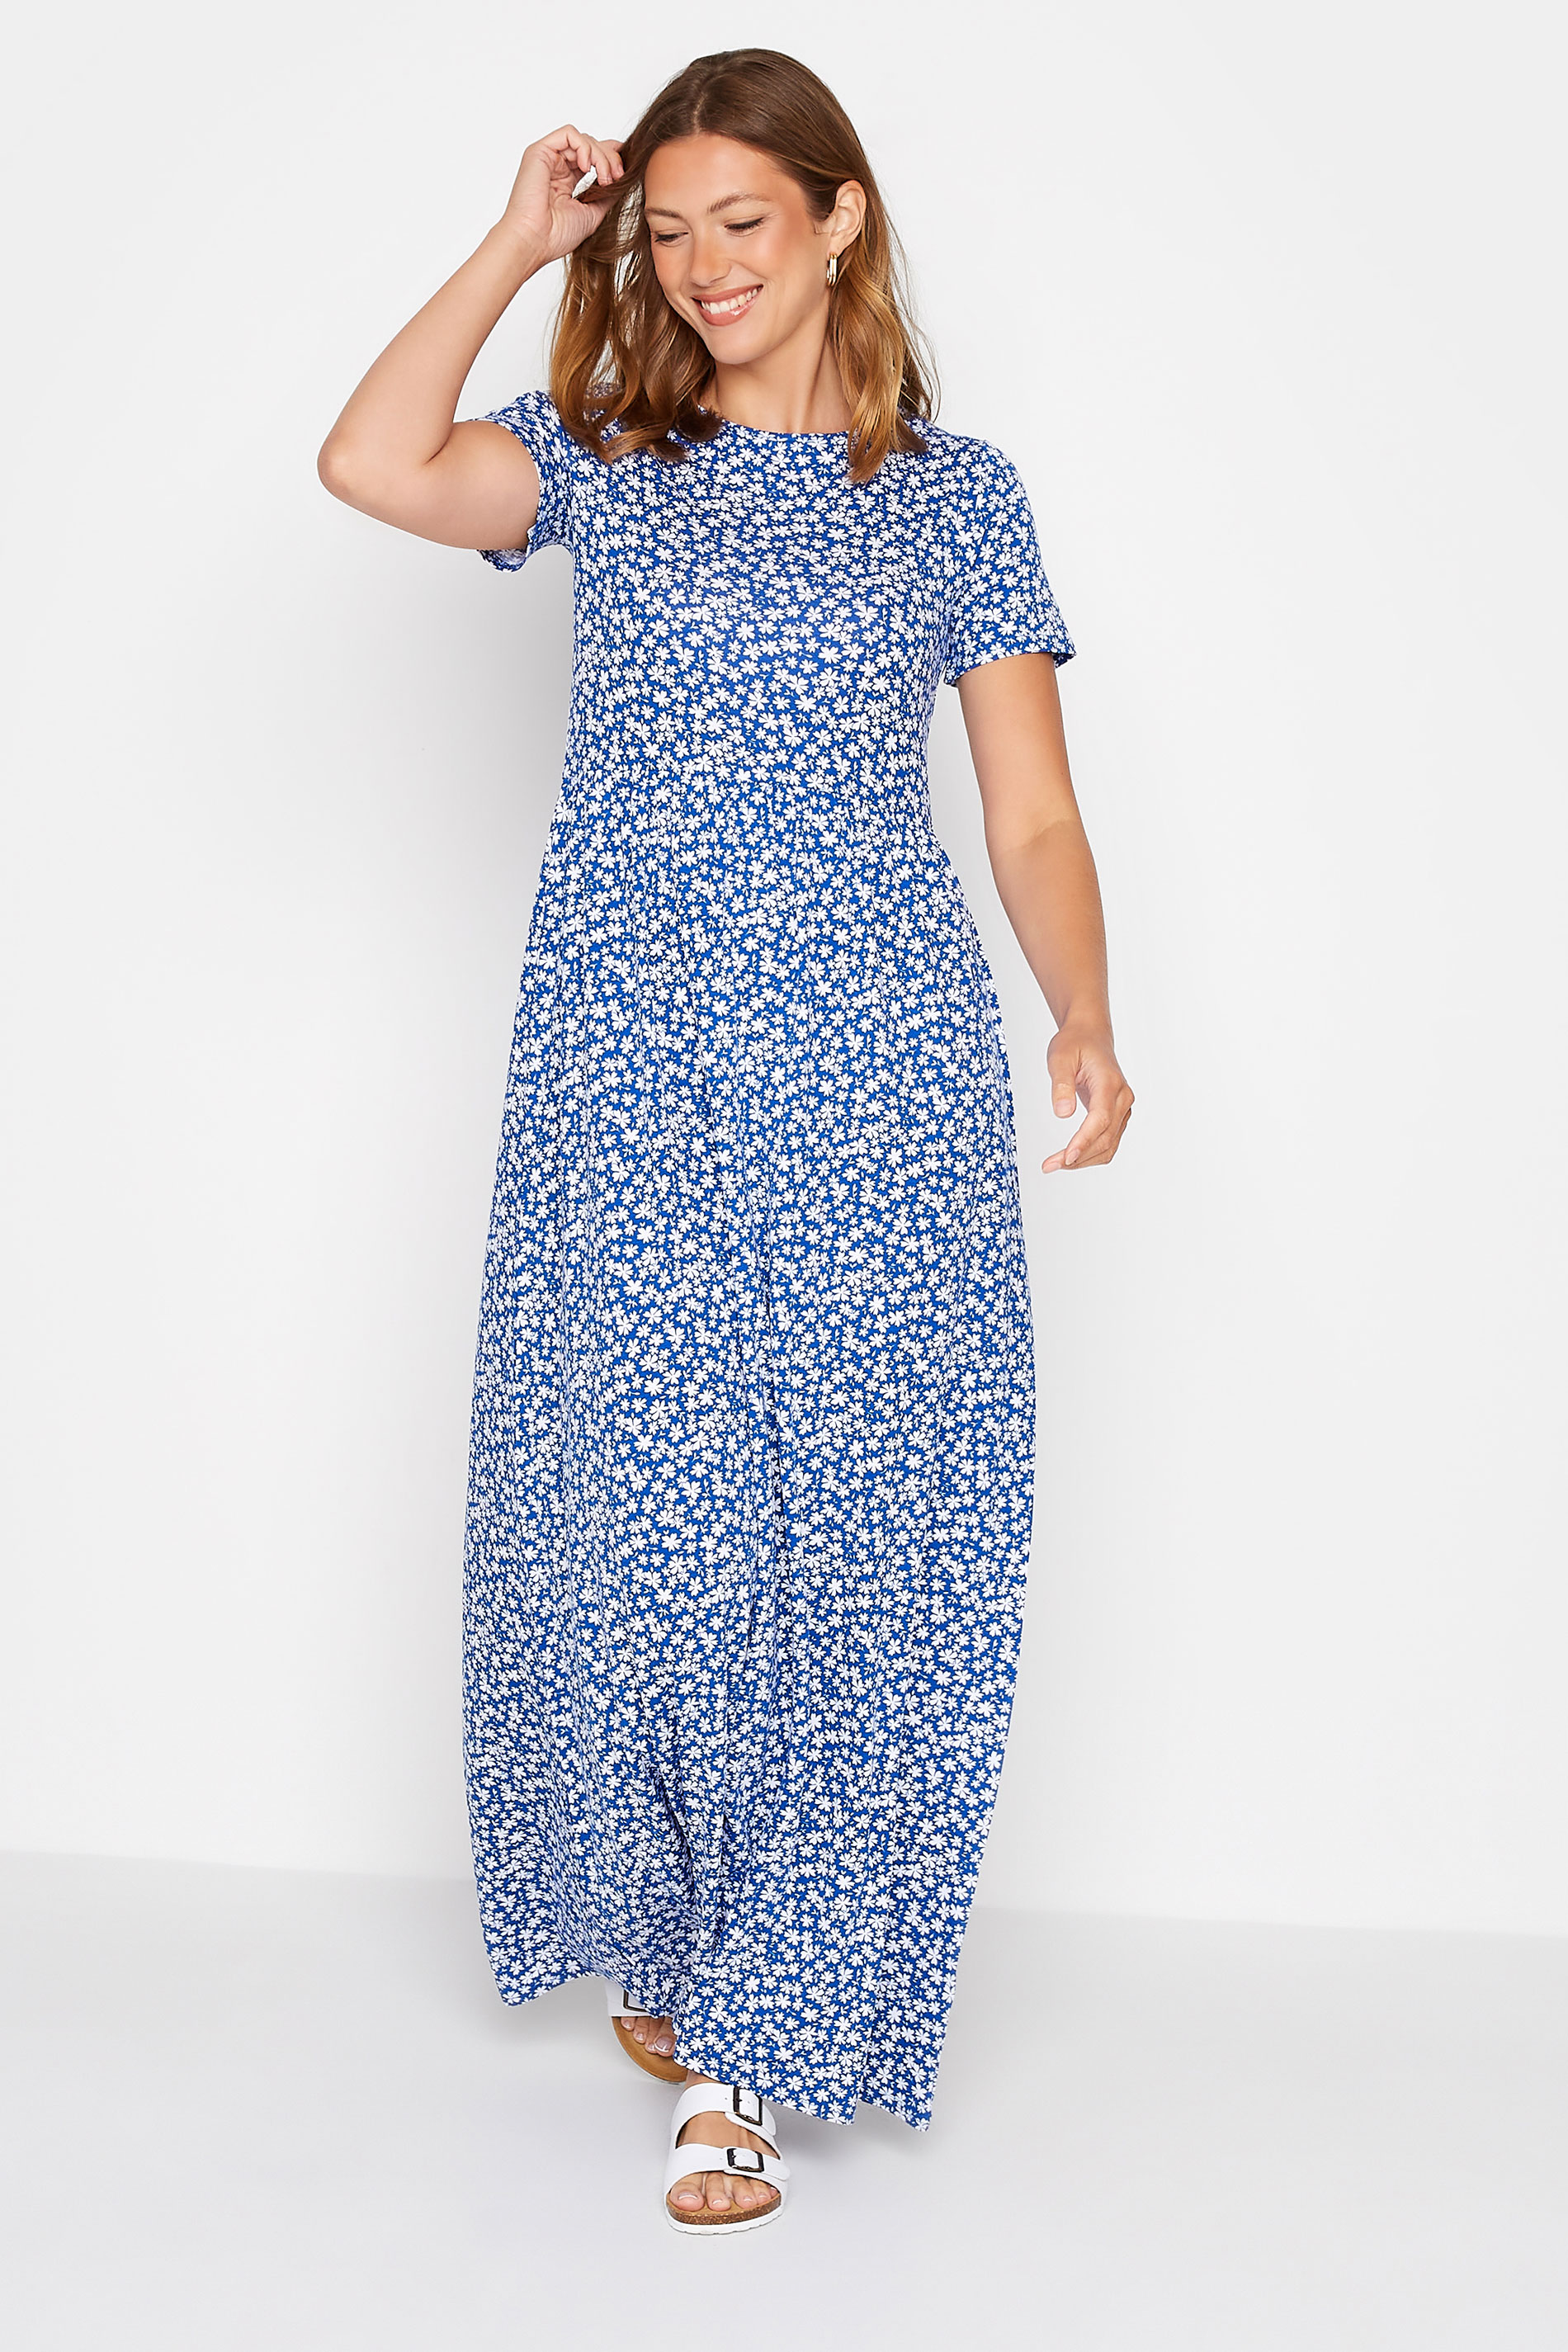 LTS Tall Women's Blue Ditsy Print Maxi Dress | Long Tall Sally  1